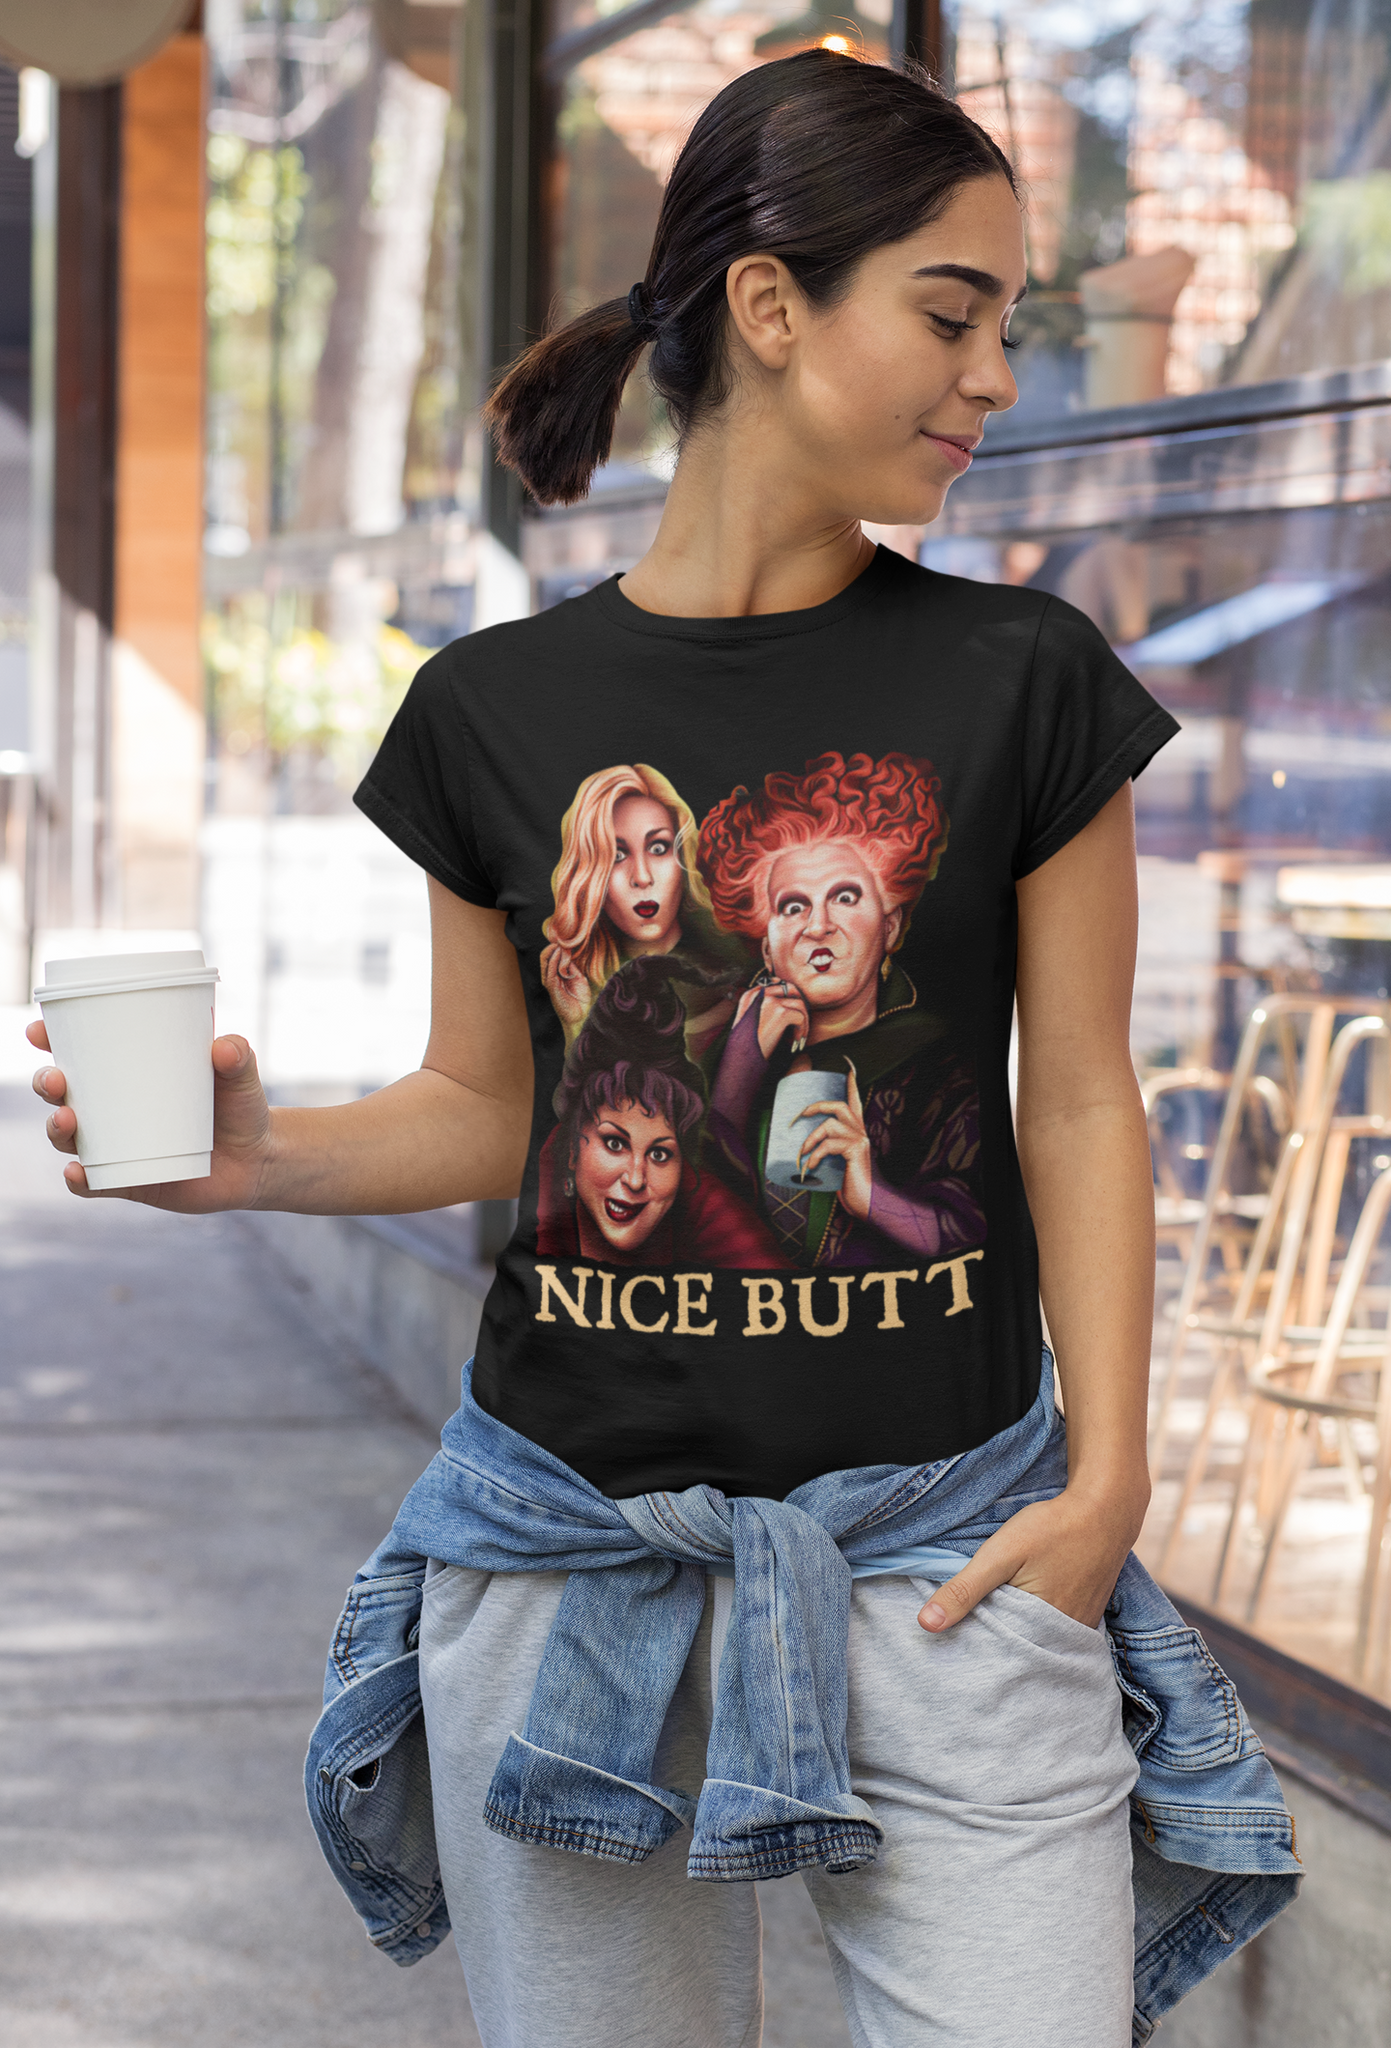 Hocus Pocus T Shirt, Nice Butt Shirt, Winifred Sarah Mary Tshirt, Halloween Gifts